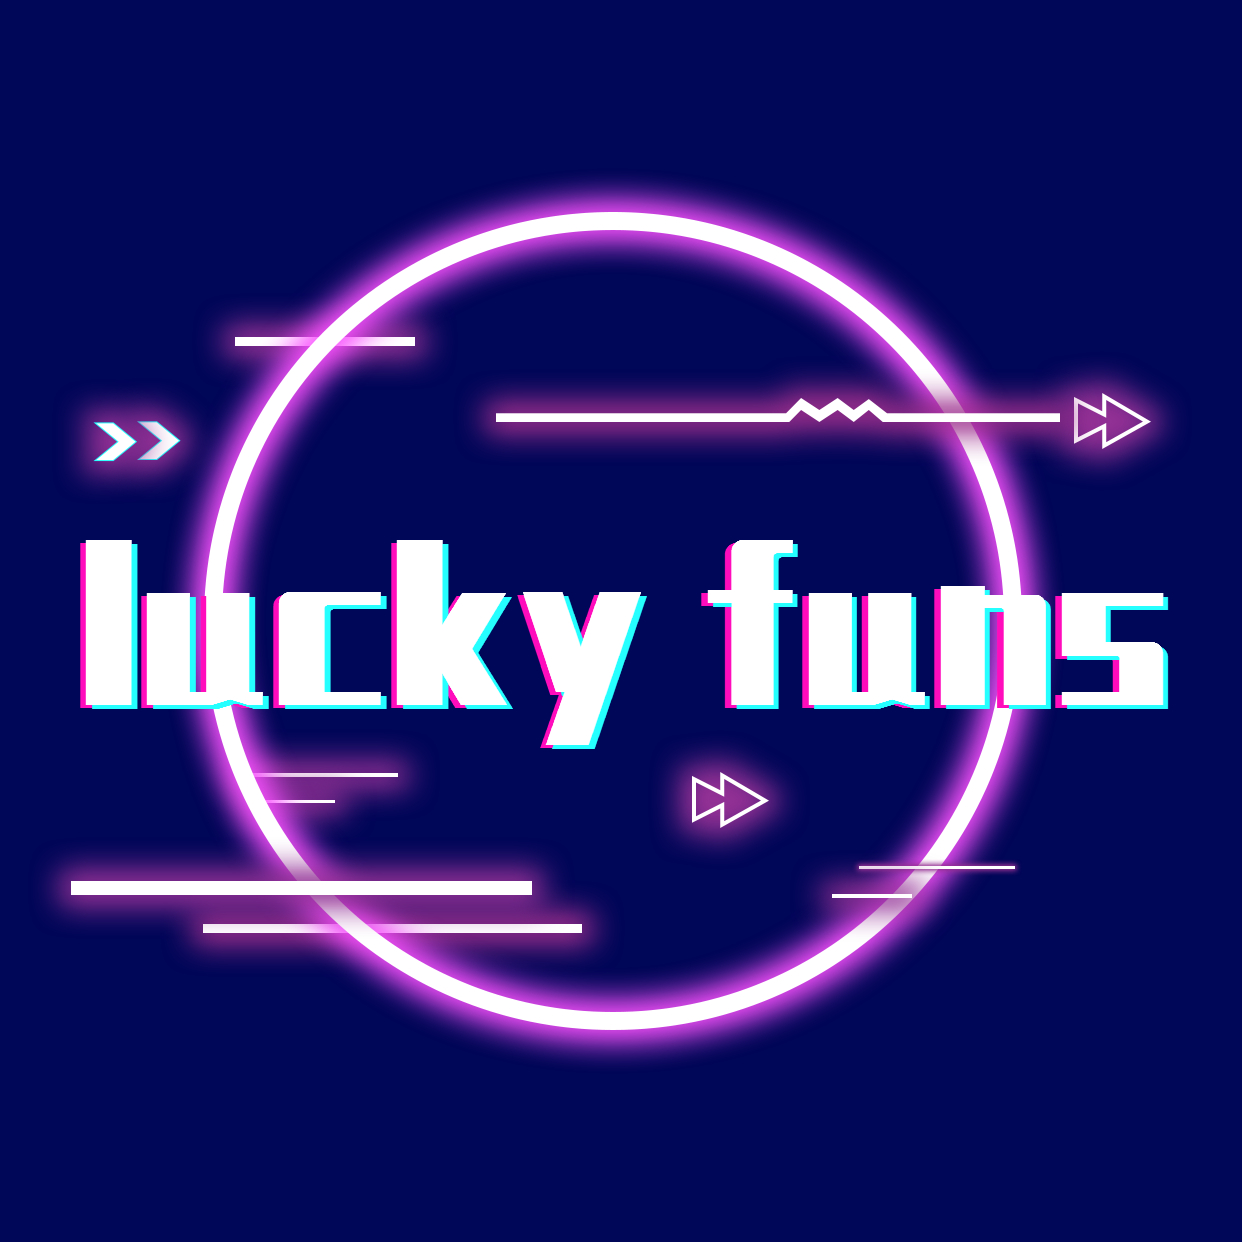 luckyfuns store